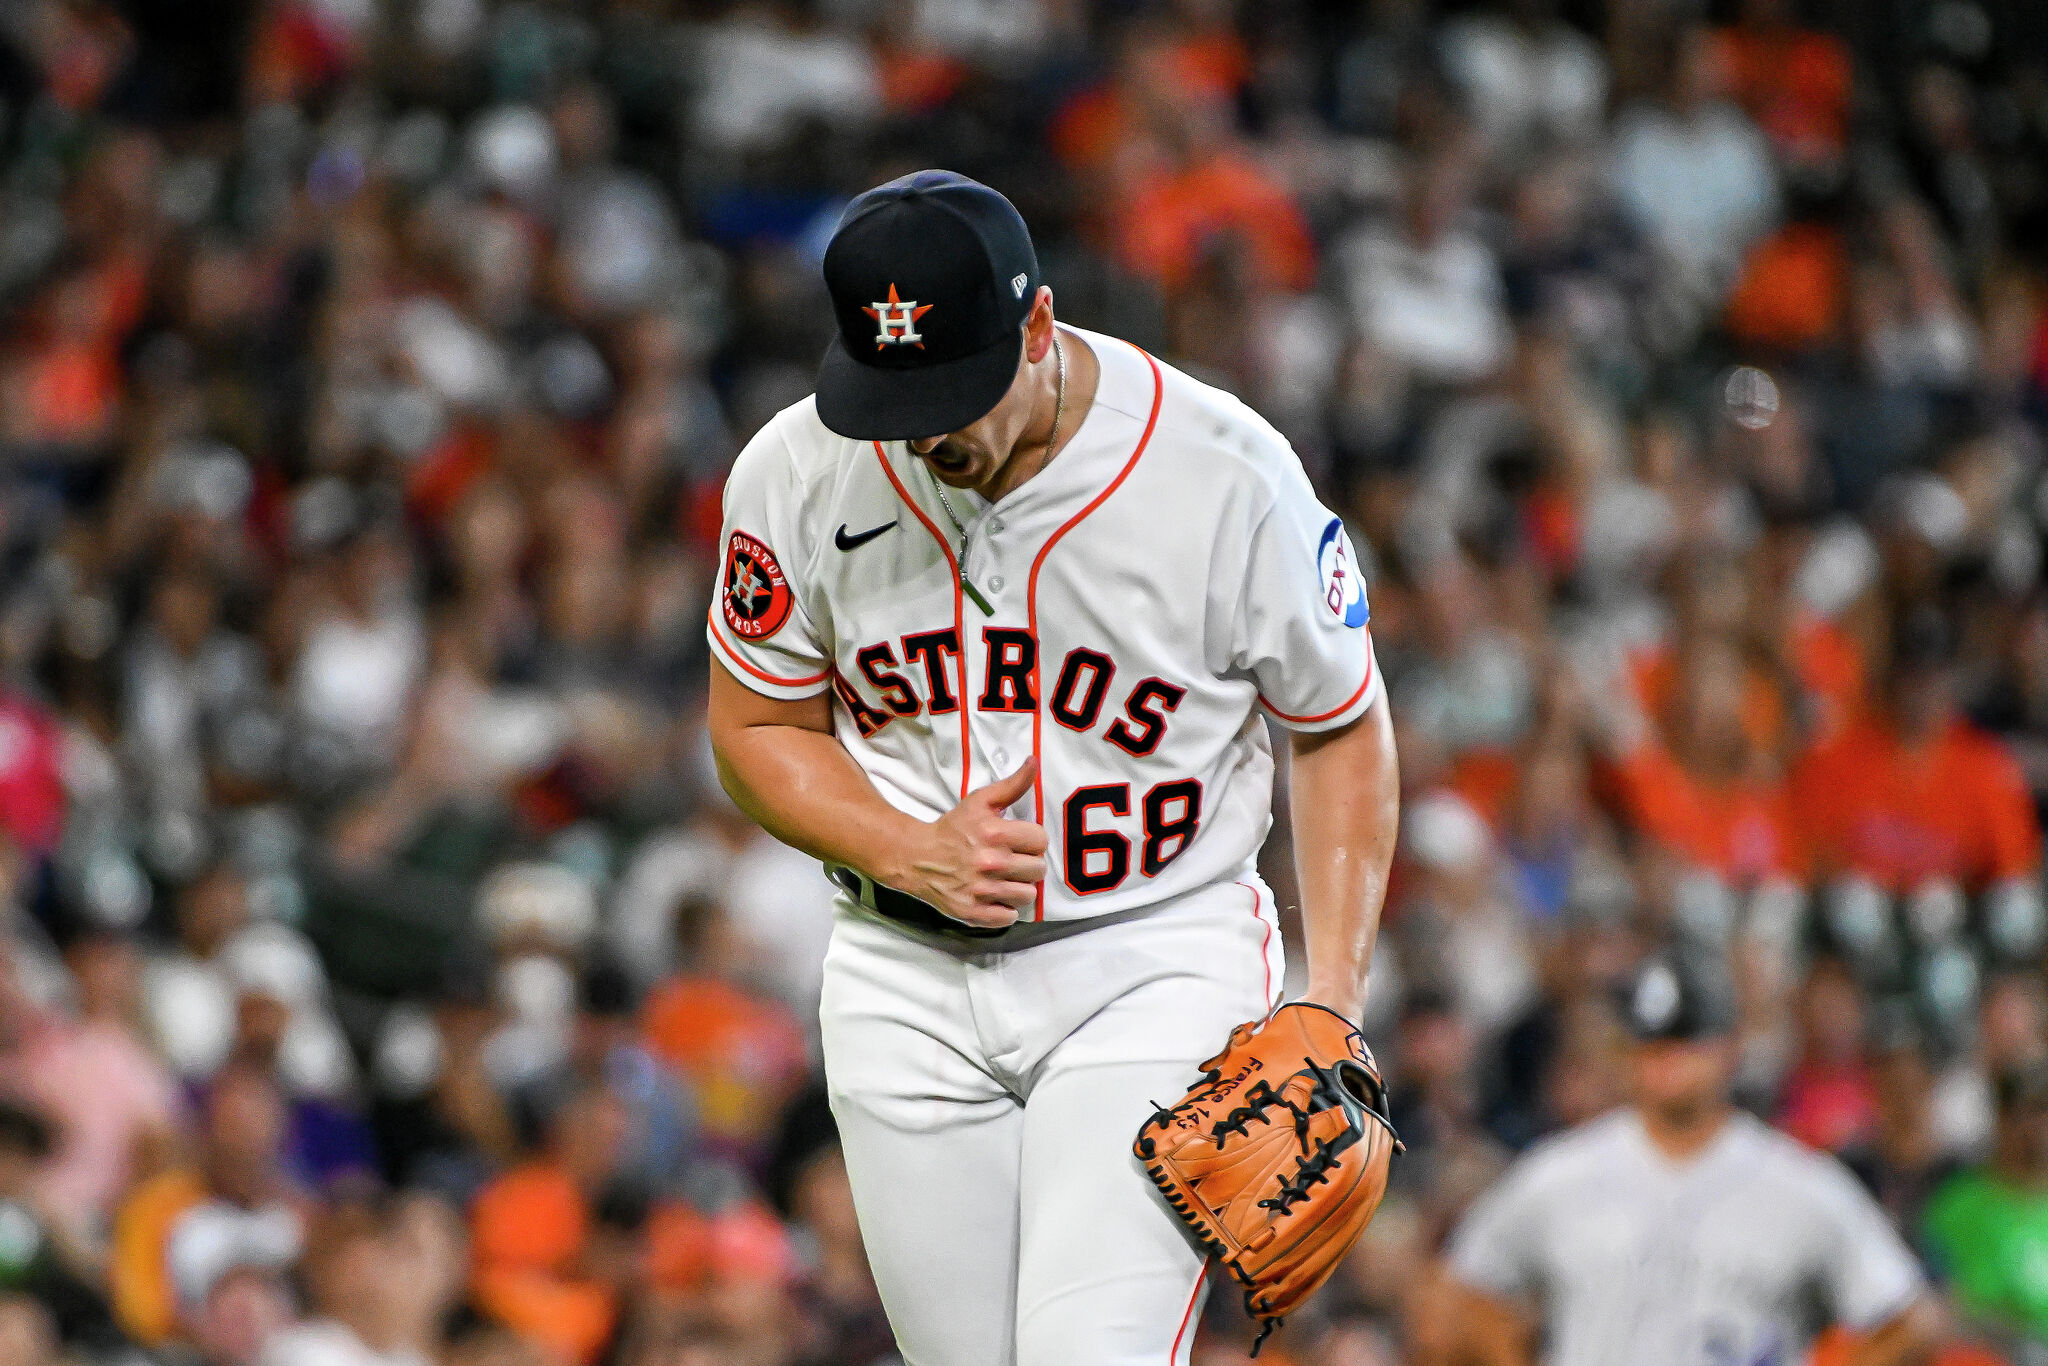 World Series: Framber Valdez, unsung Astros ace, puts Houston on